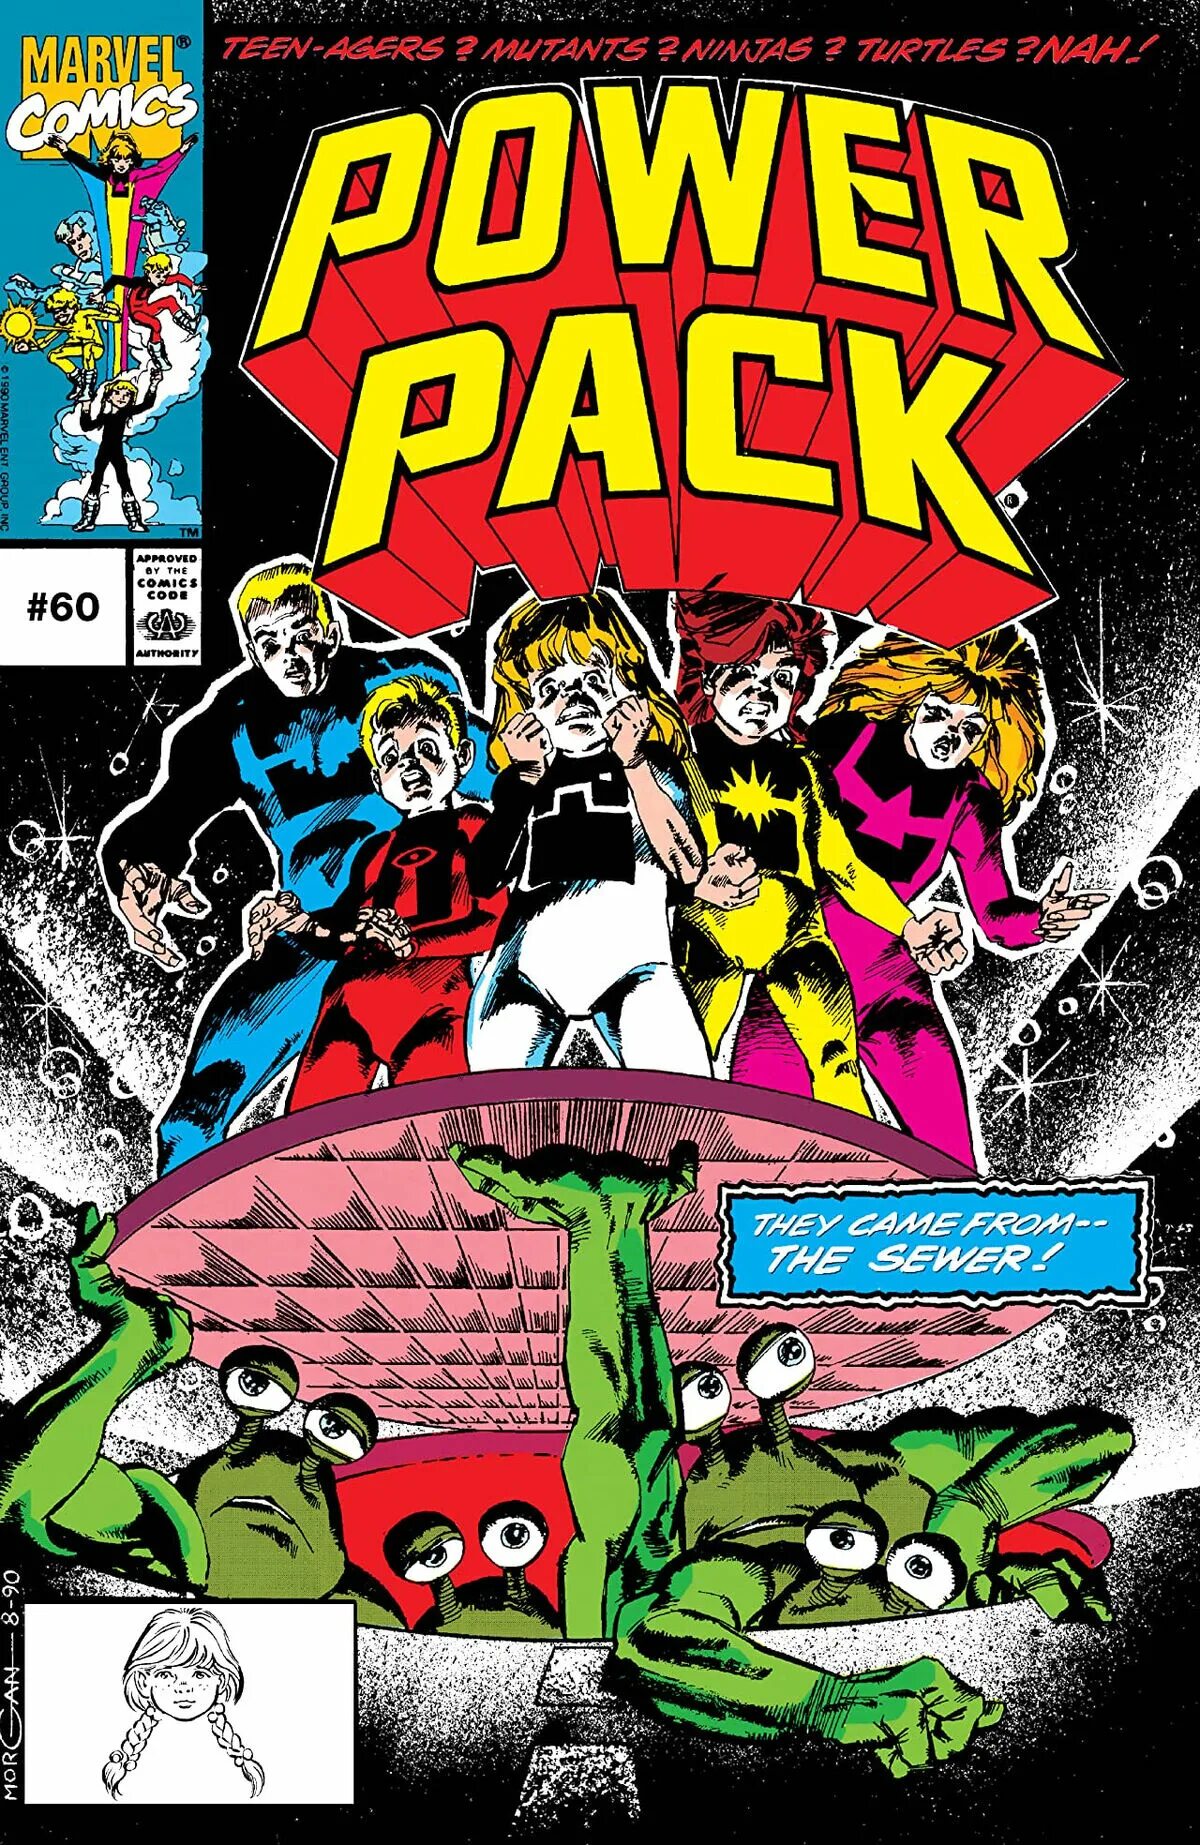 Power Pack Marvel. POWERPACK комиксы. Power Pack Marvel Comics.